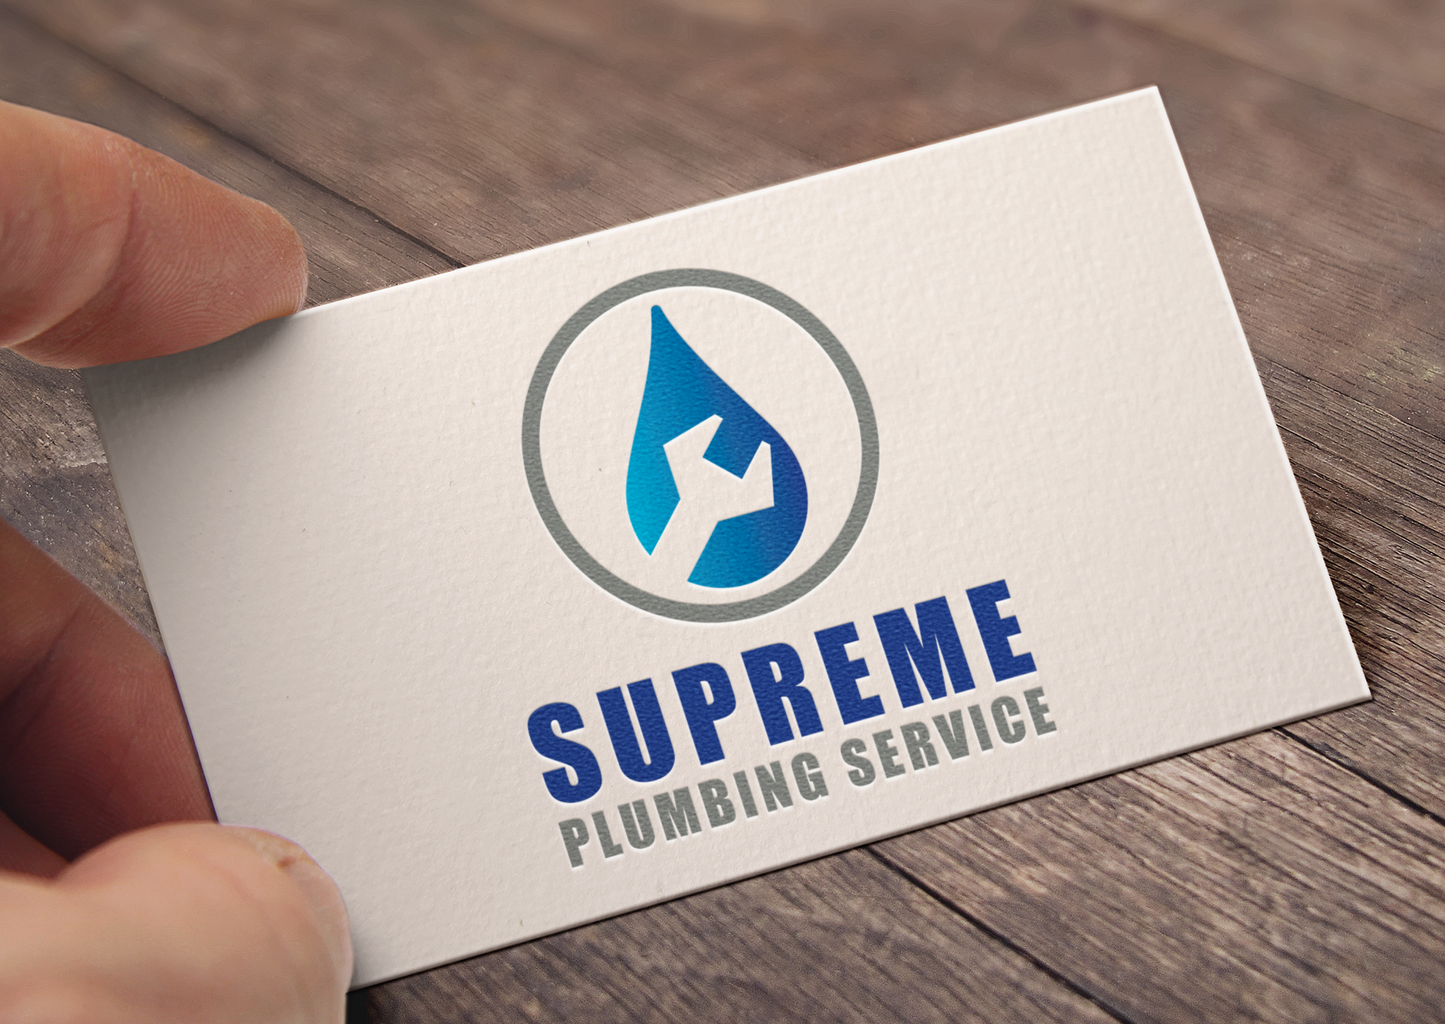 Plumbing Services Logo | Logo Design | Plumber Branding | Water Drop Design | Wrench | Plumber Design | Handy Man Services